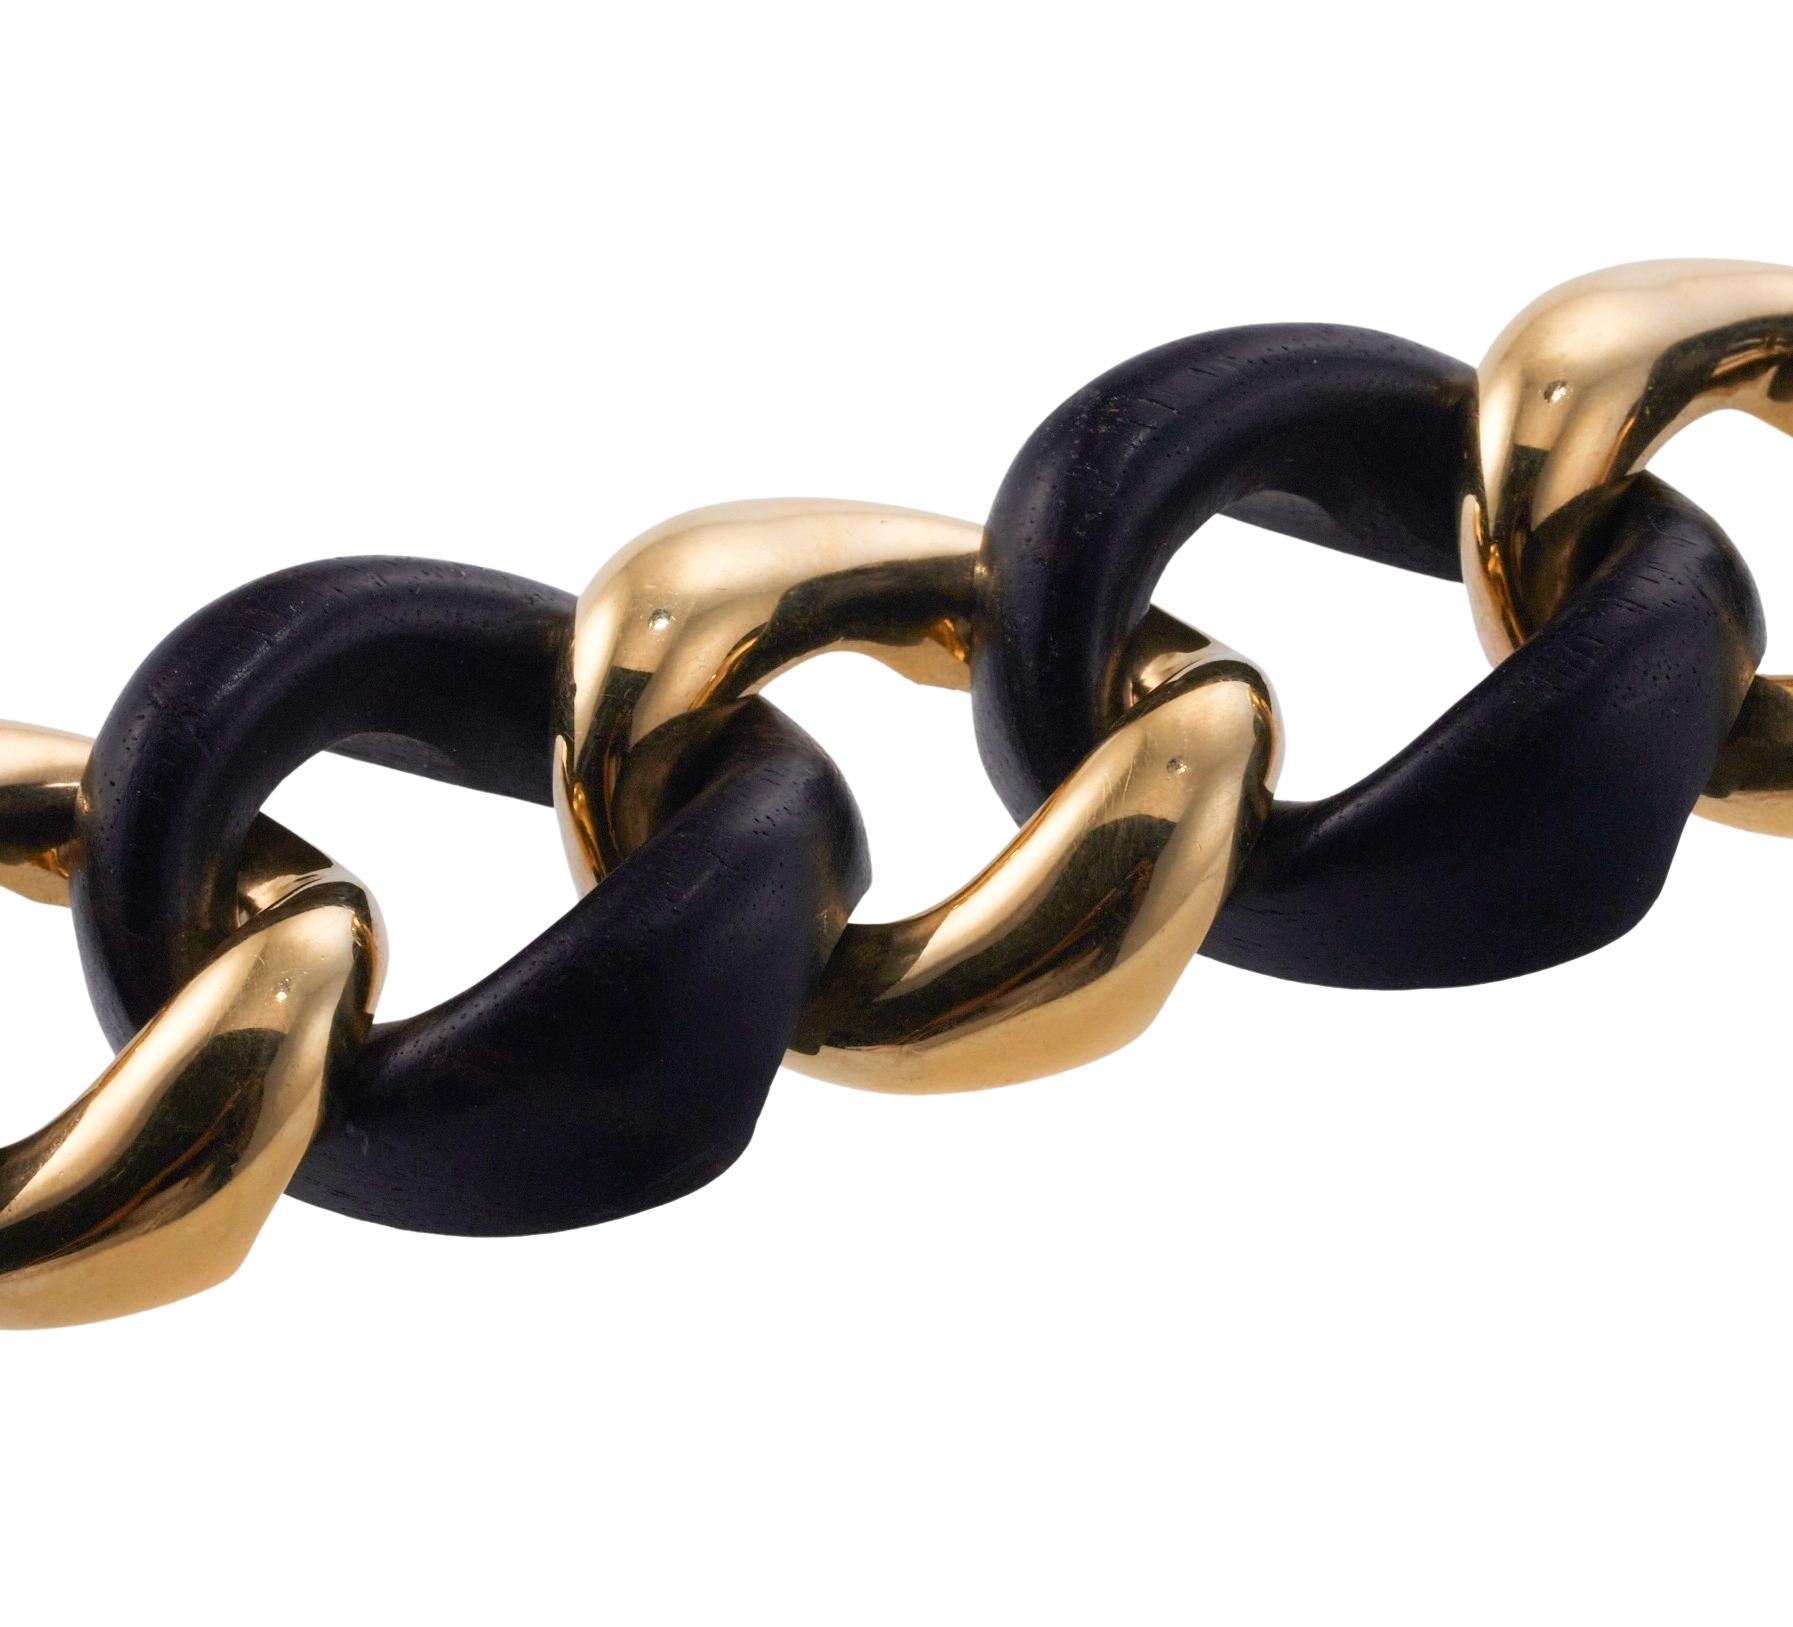 Large link bracelet by Seaman Schepps in 18k gold and ebony wood. Bracelet measures 8